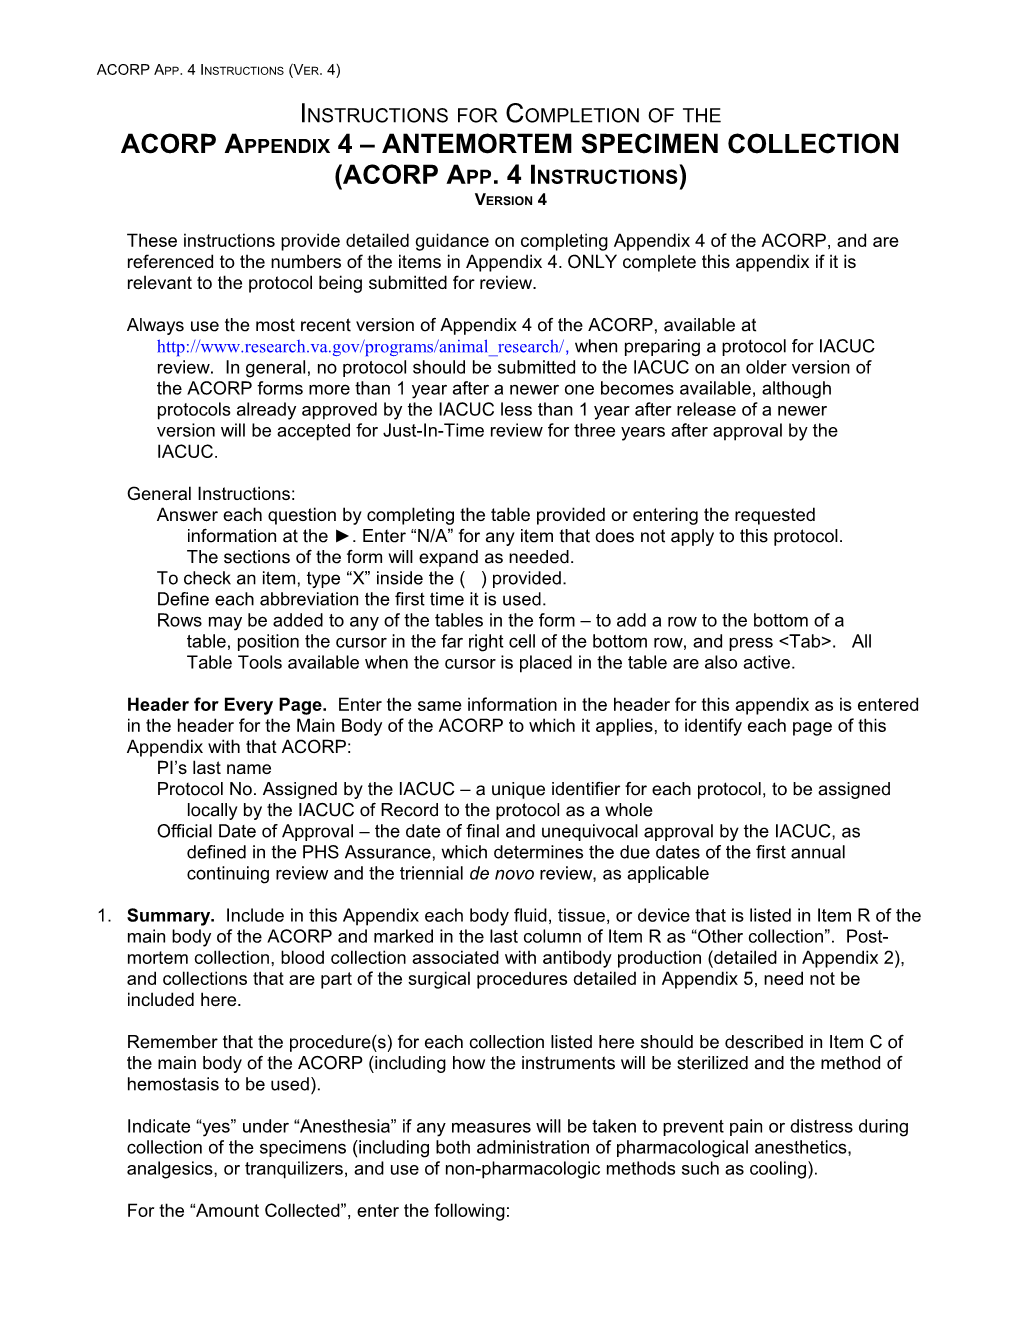 Instructions for Completing ACORP Appendix 4 (Portland VA Medical Center)